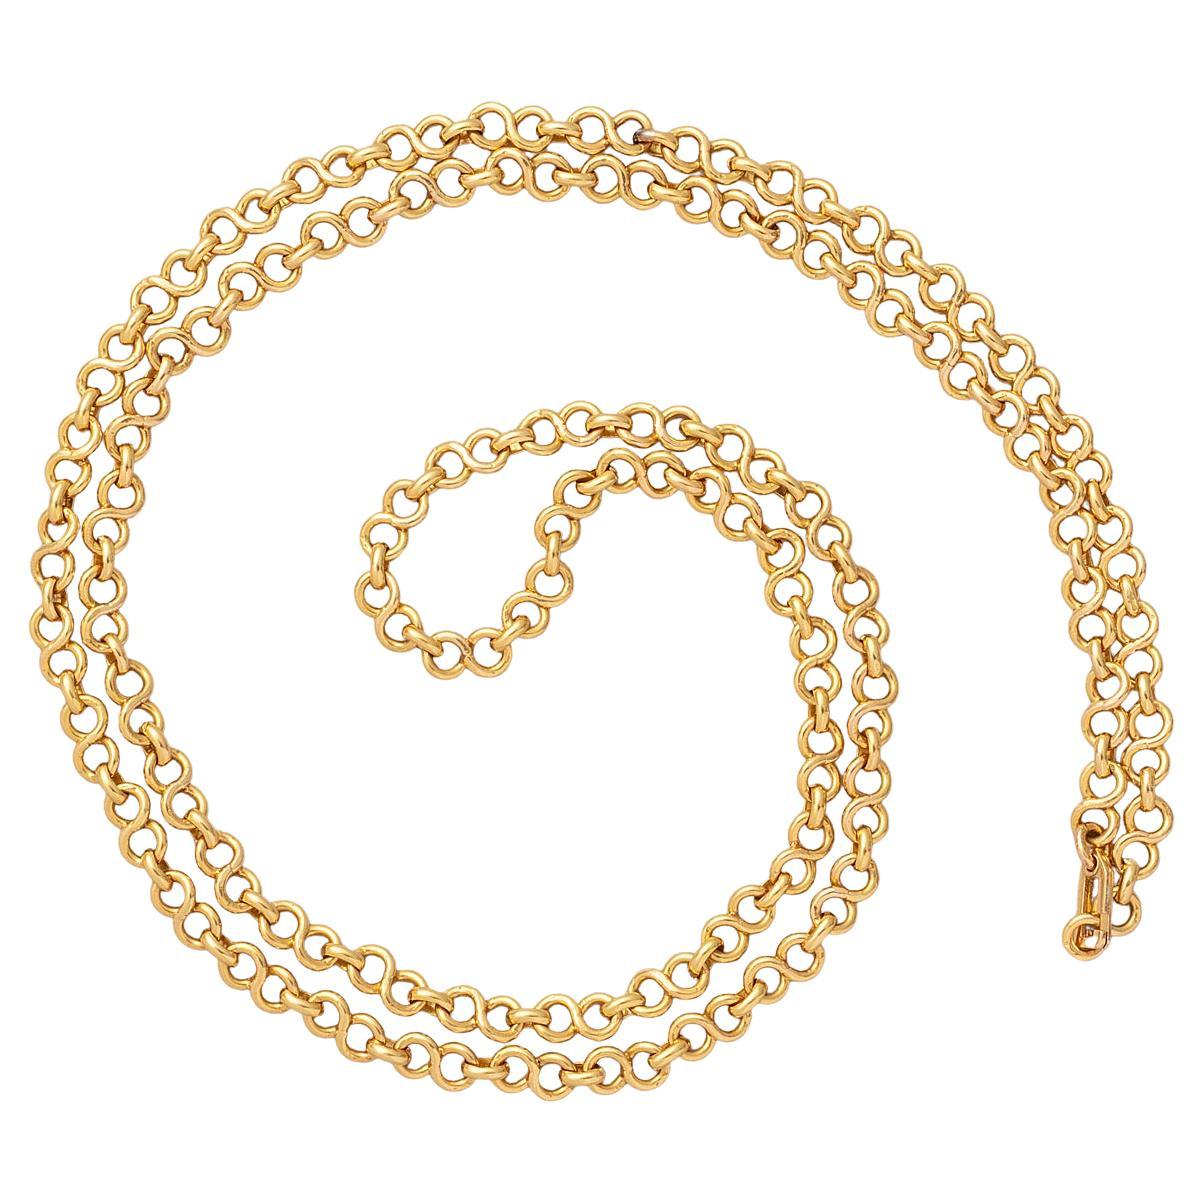 An 18 Carat Gold Vintage Long Chain